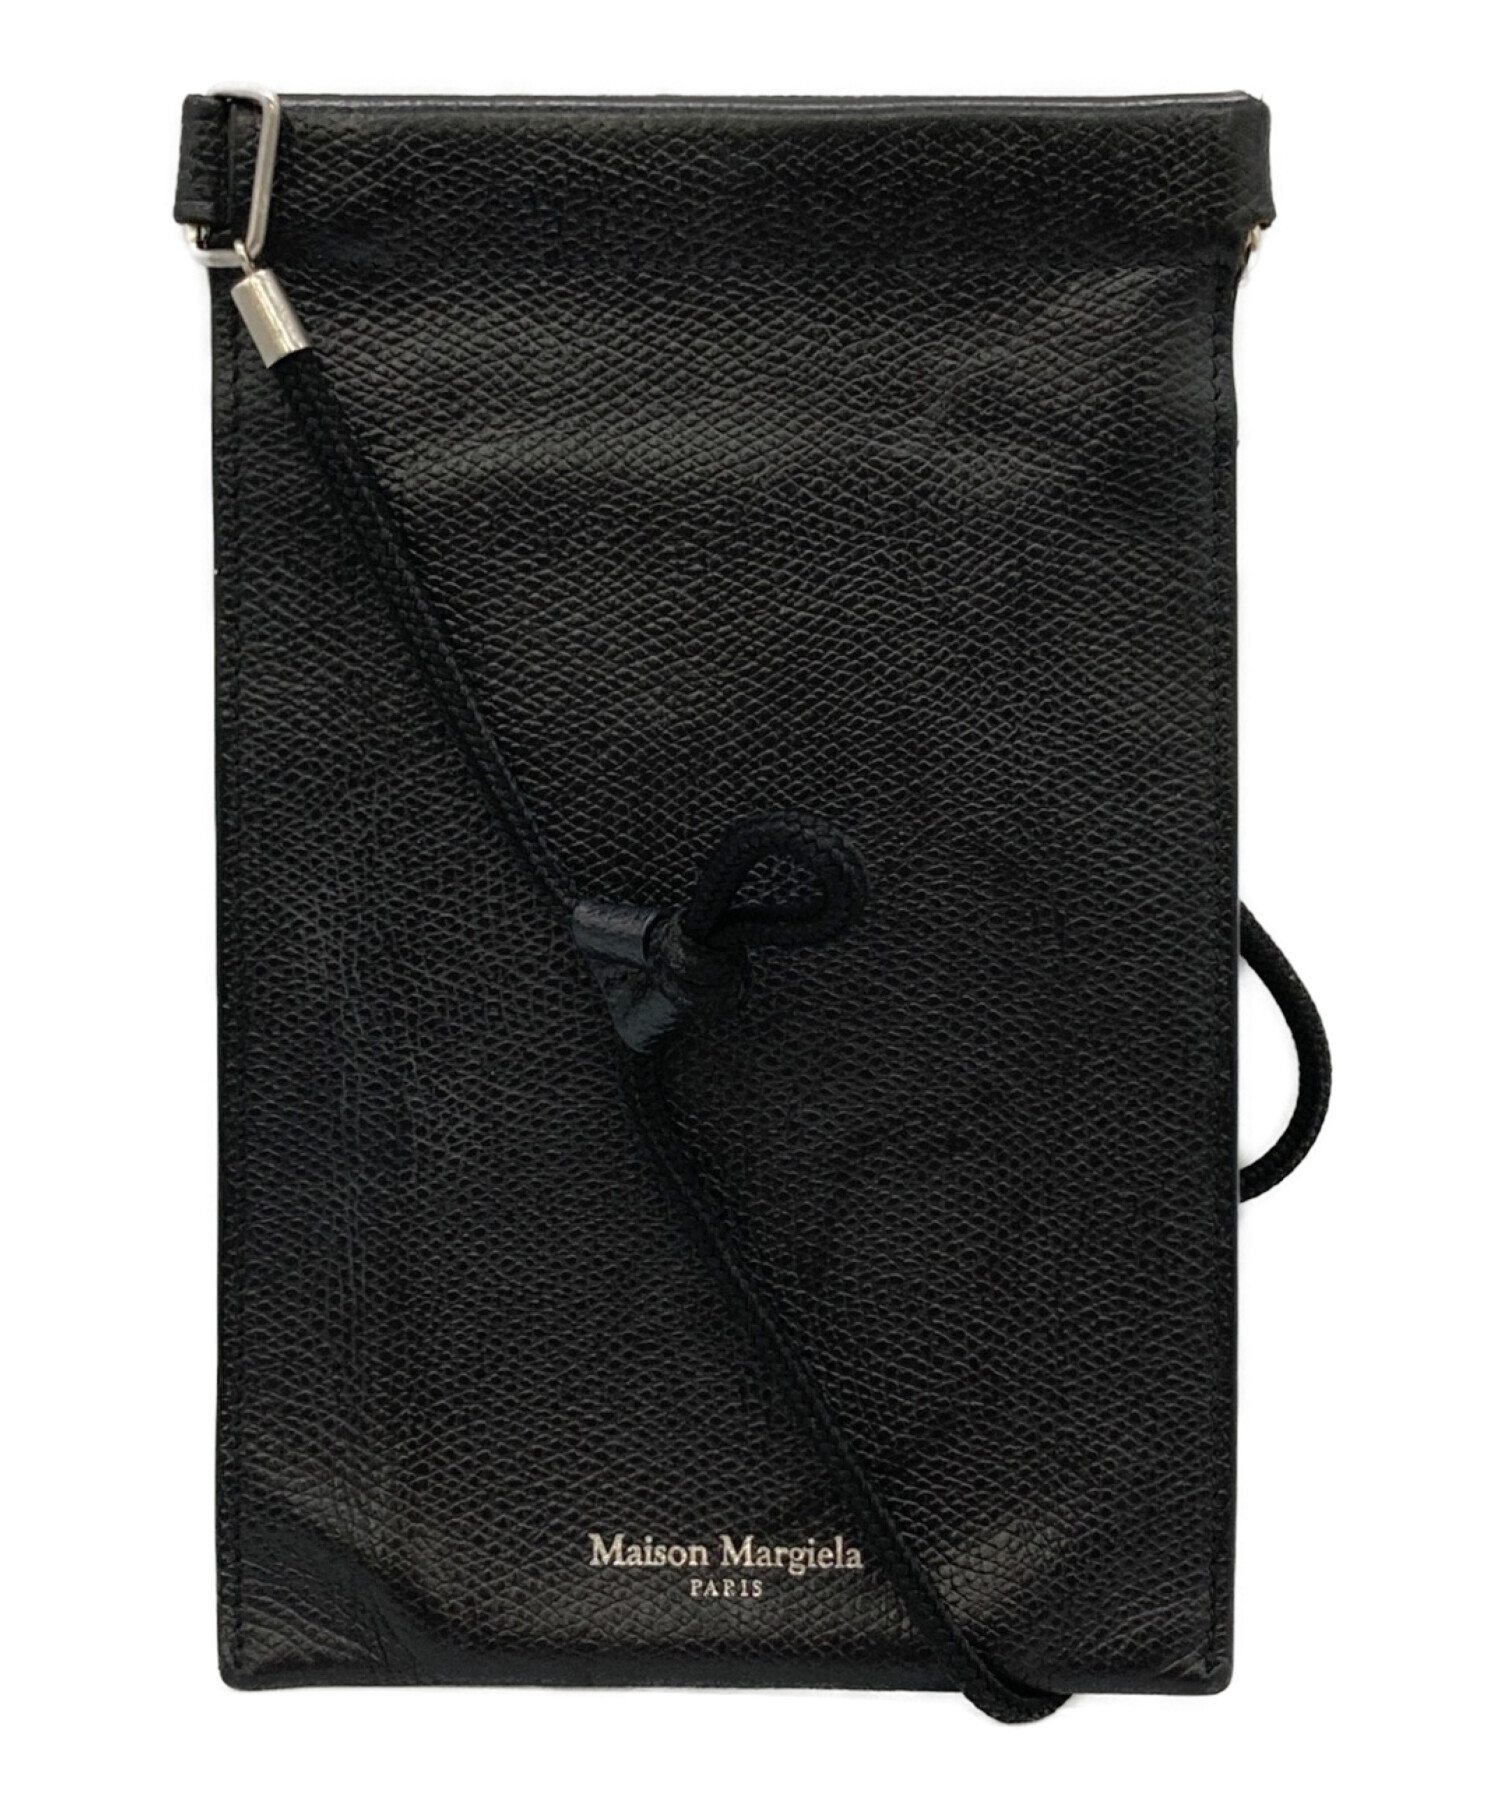 Maison Margiela (メゾンマルジェラ) スマートフォンポーチ ブラック